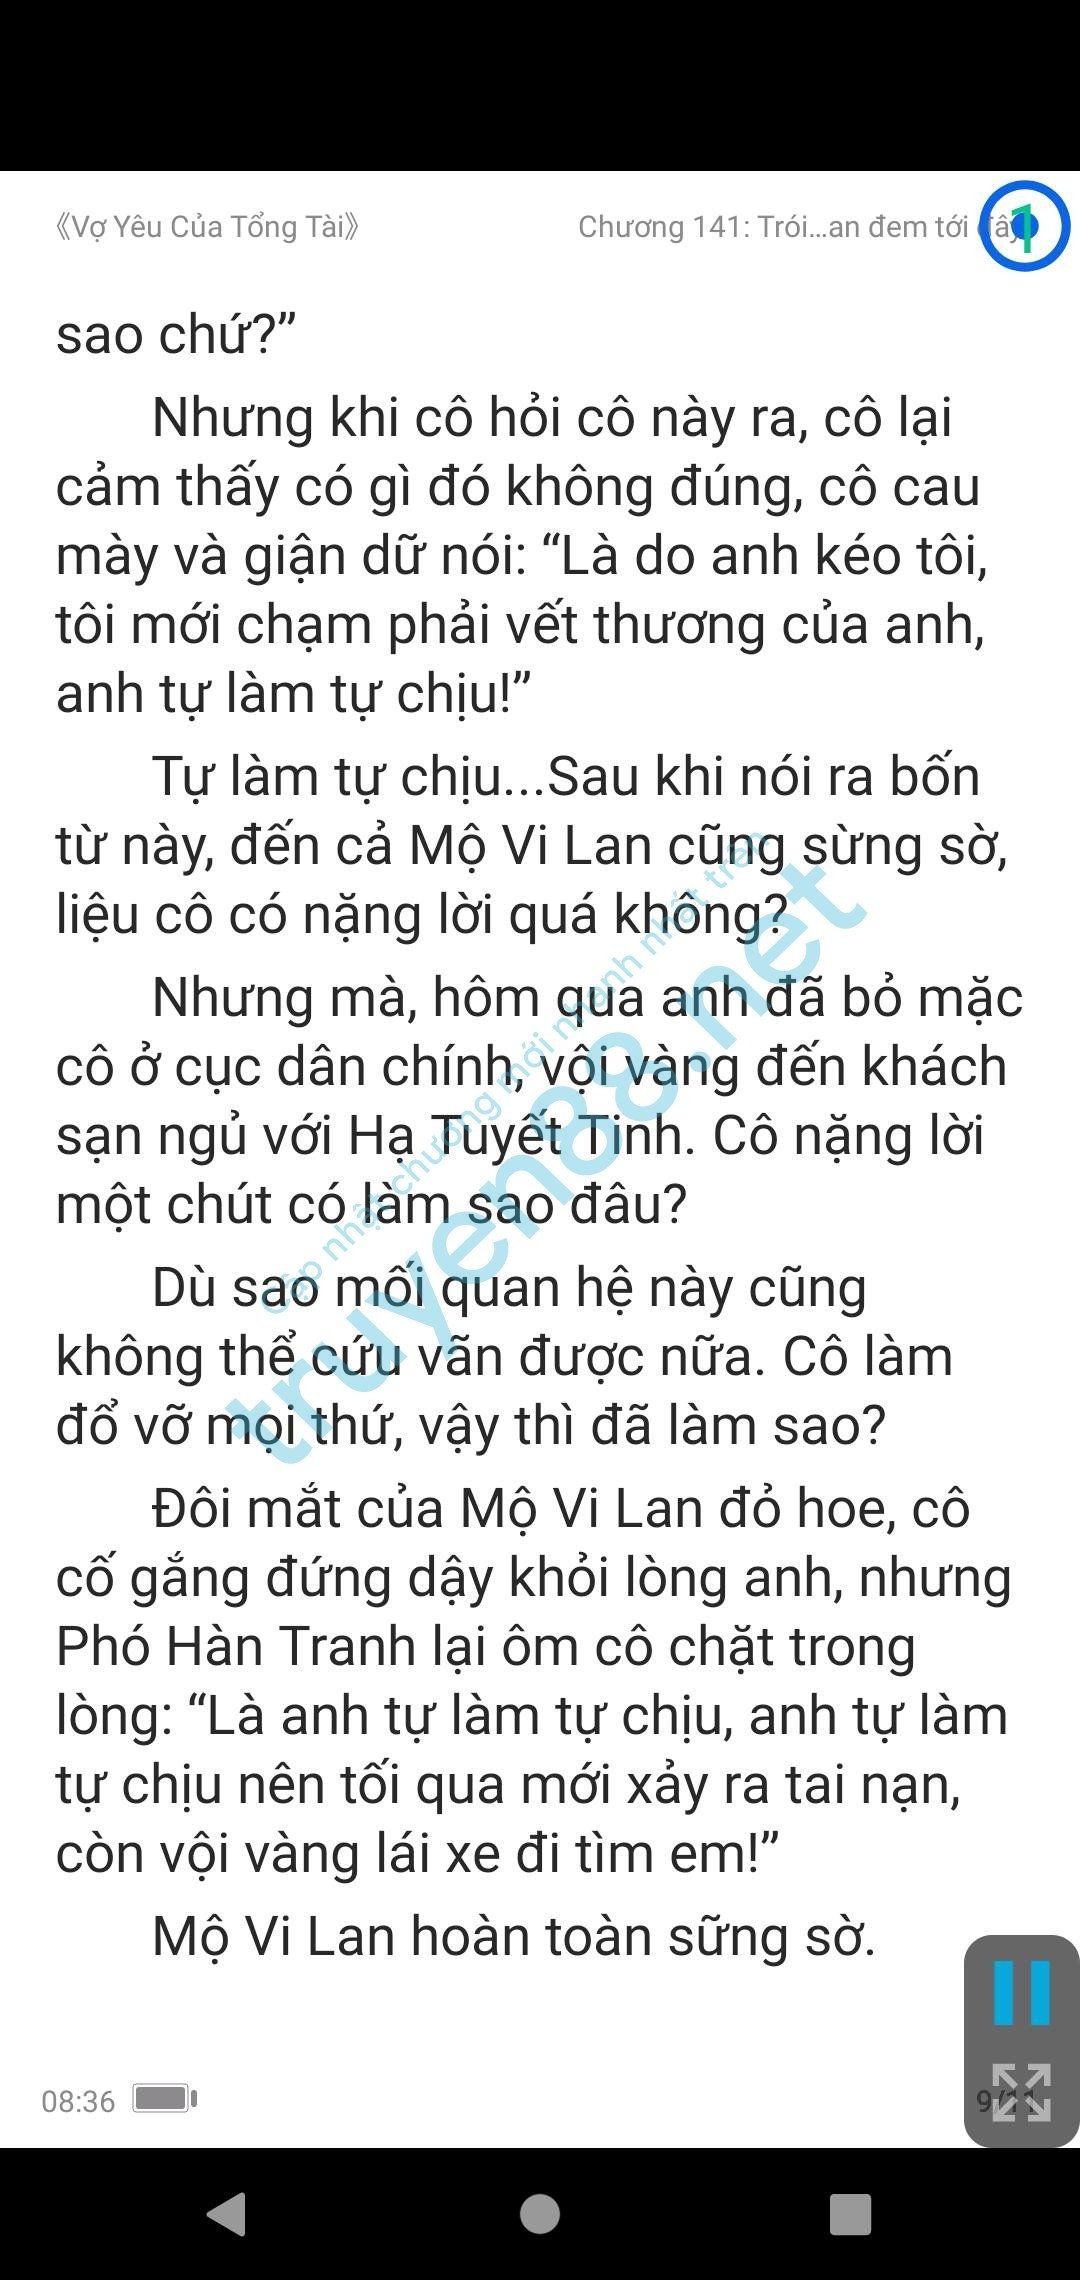 vo-yeu-cua-tong-tai-mo-vi-lan--pho-han-tranh-141-1